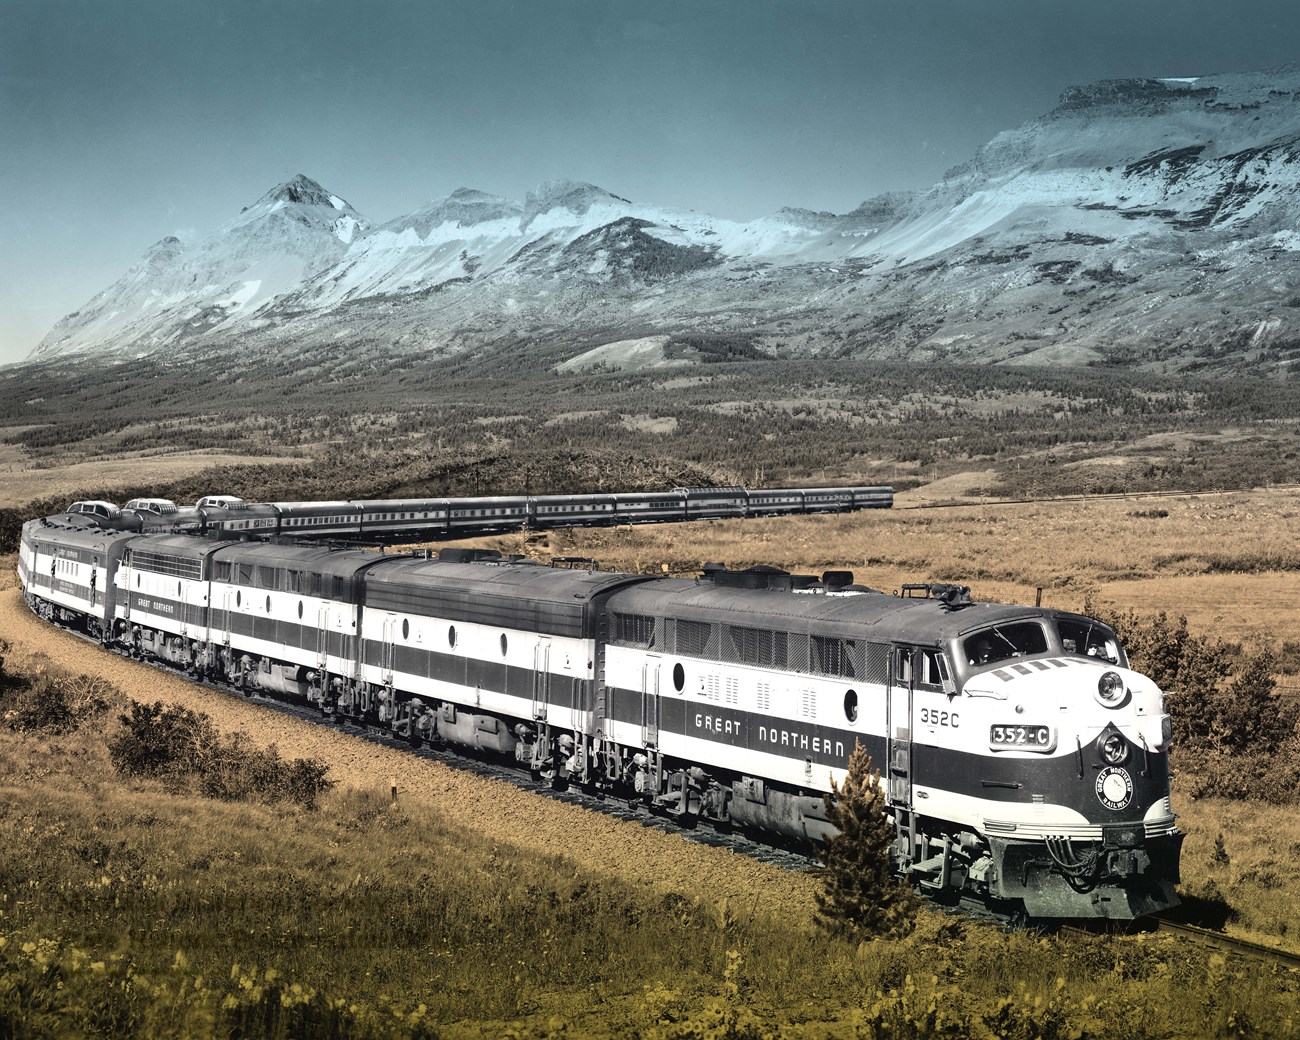 Train skirts Glacier National Park in 1955